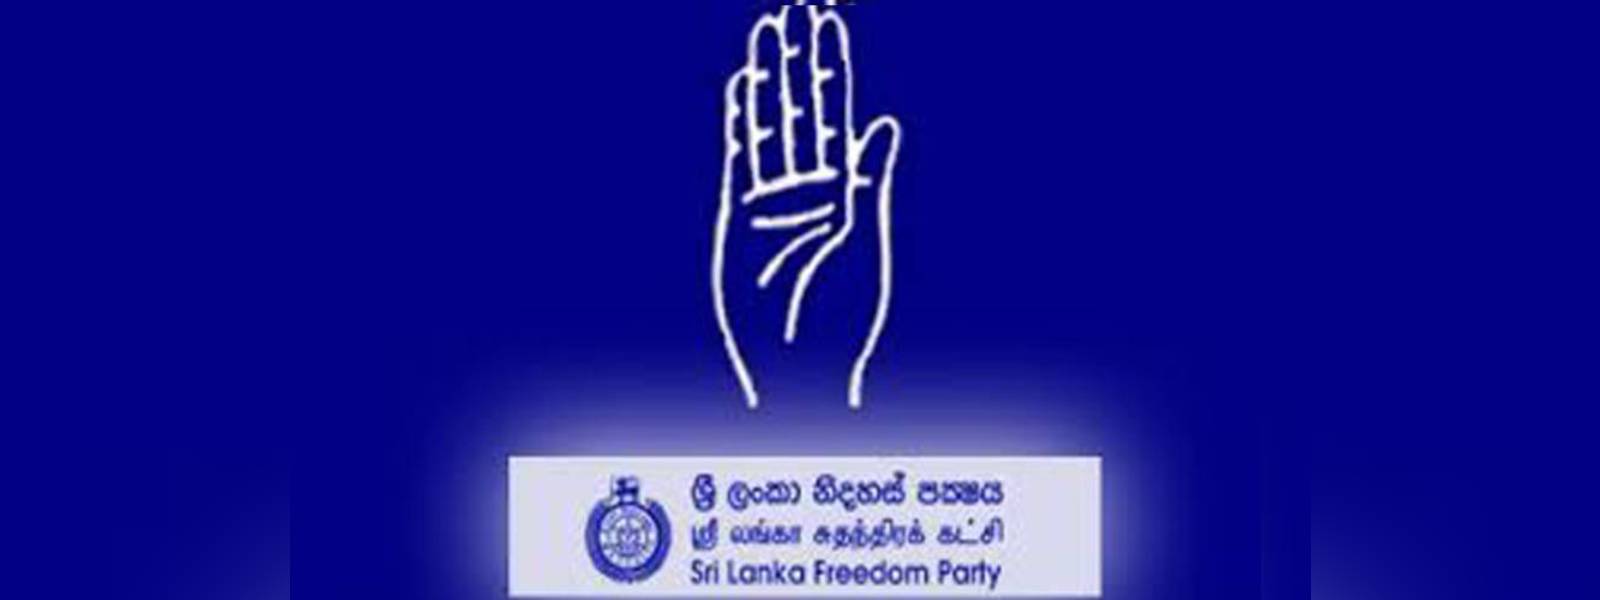 Sri Lanka Freedom Party celebrates 69th Anniversary